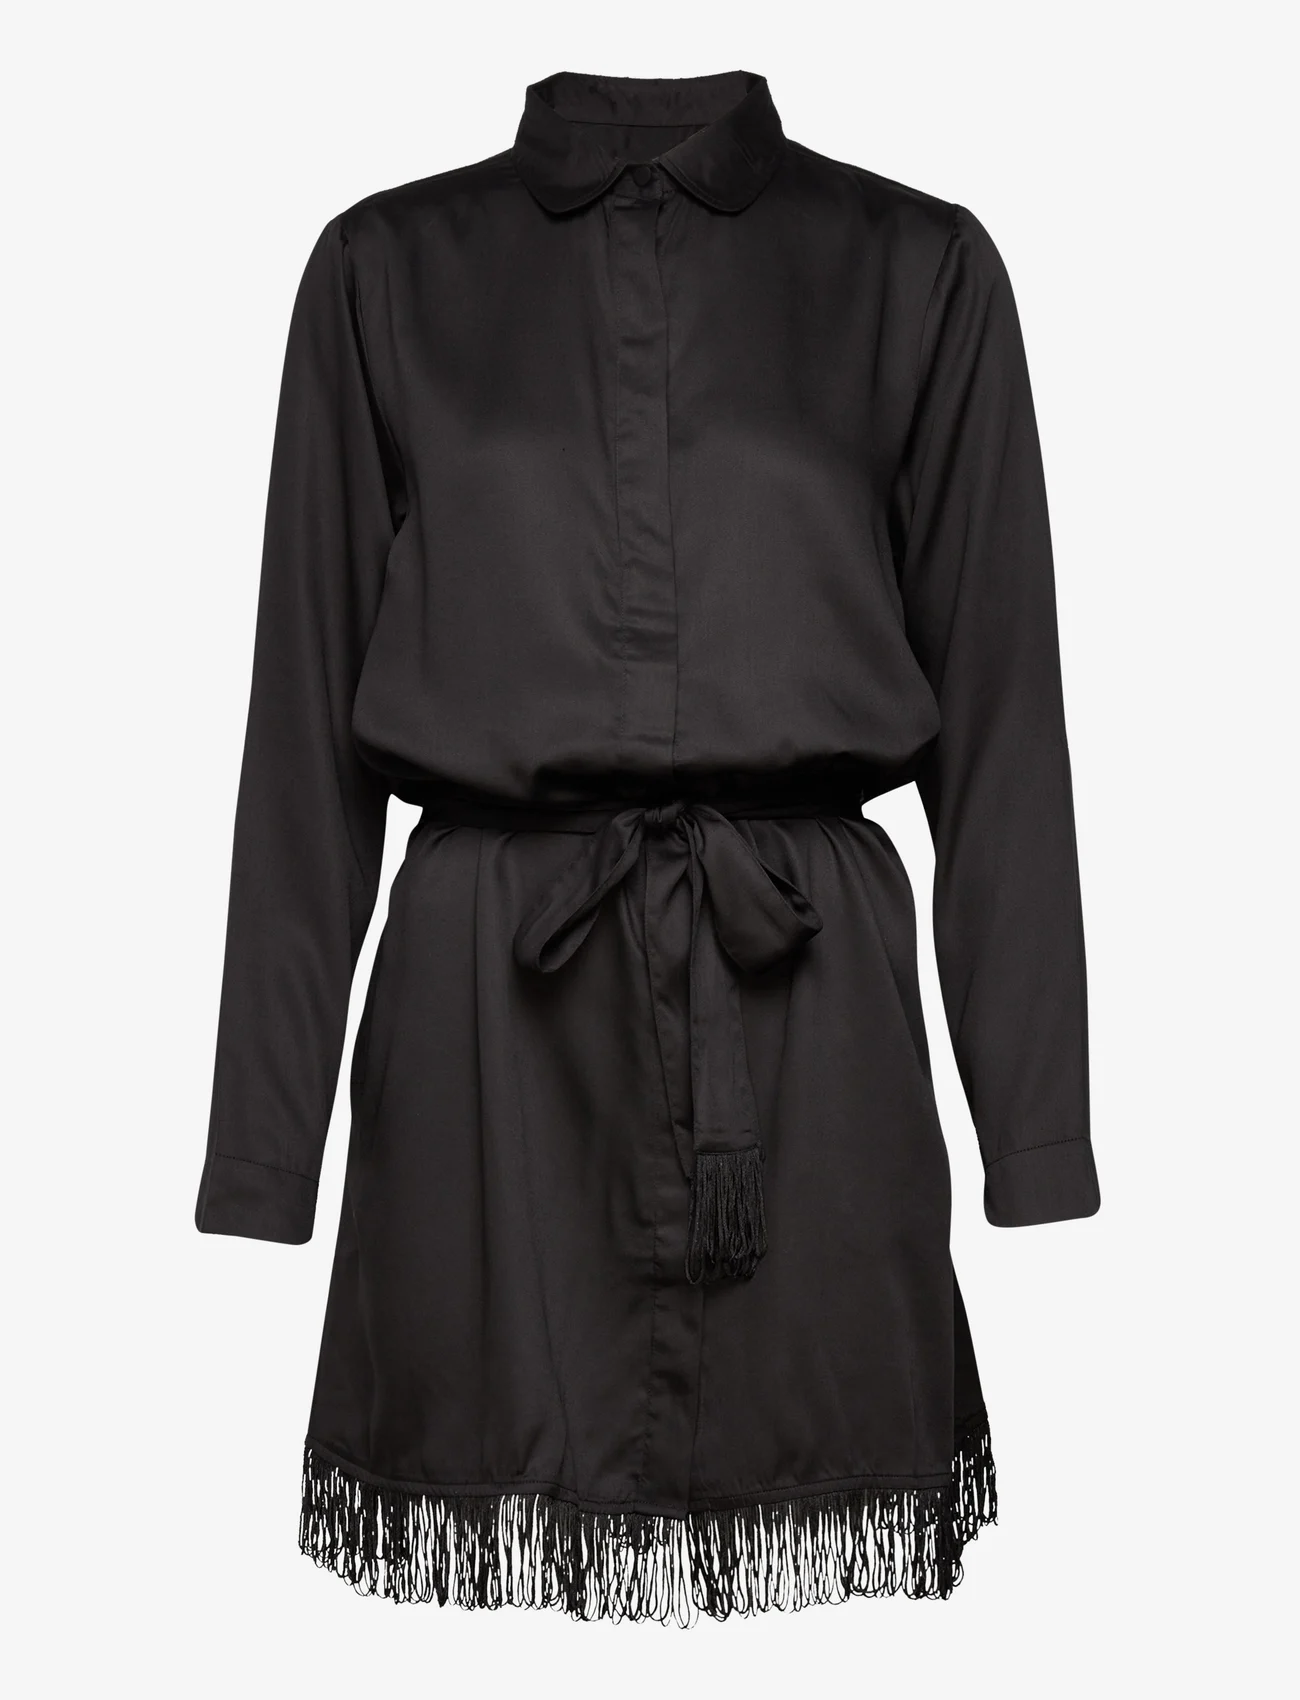 Underprotection - Freya shirt dress - hemdkleider - black - 0